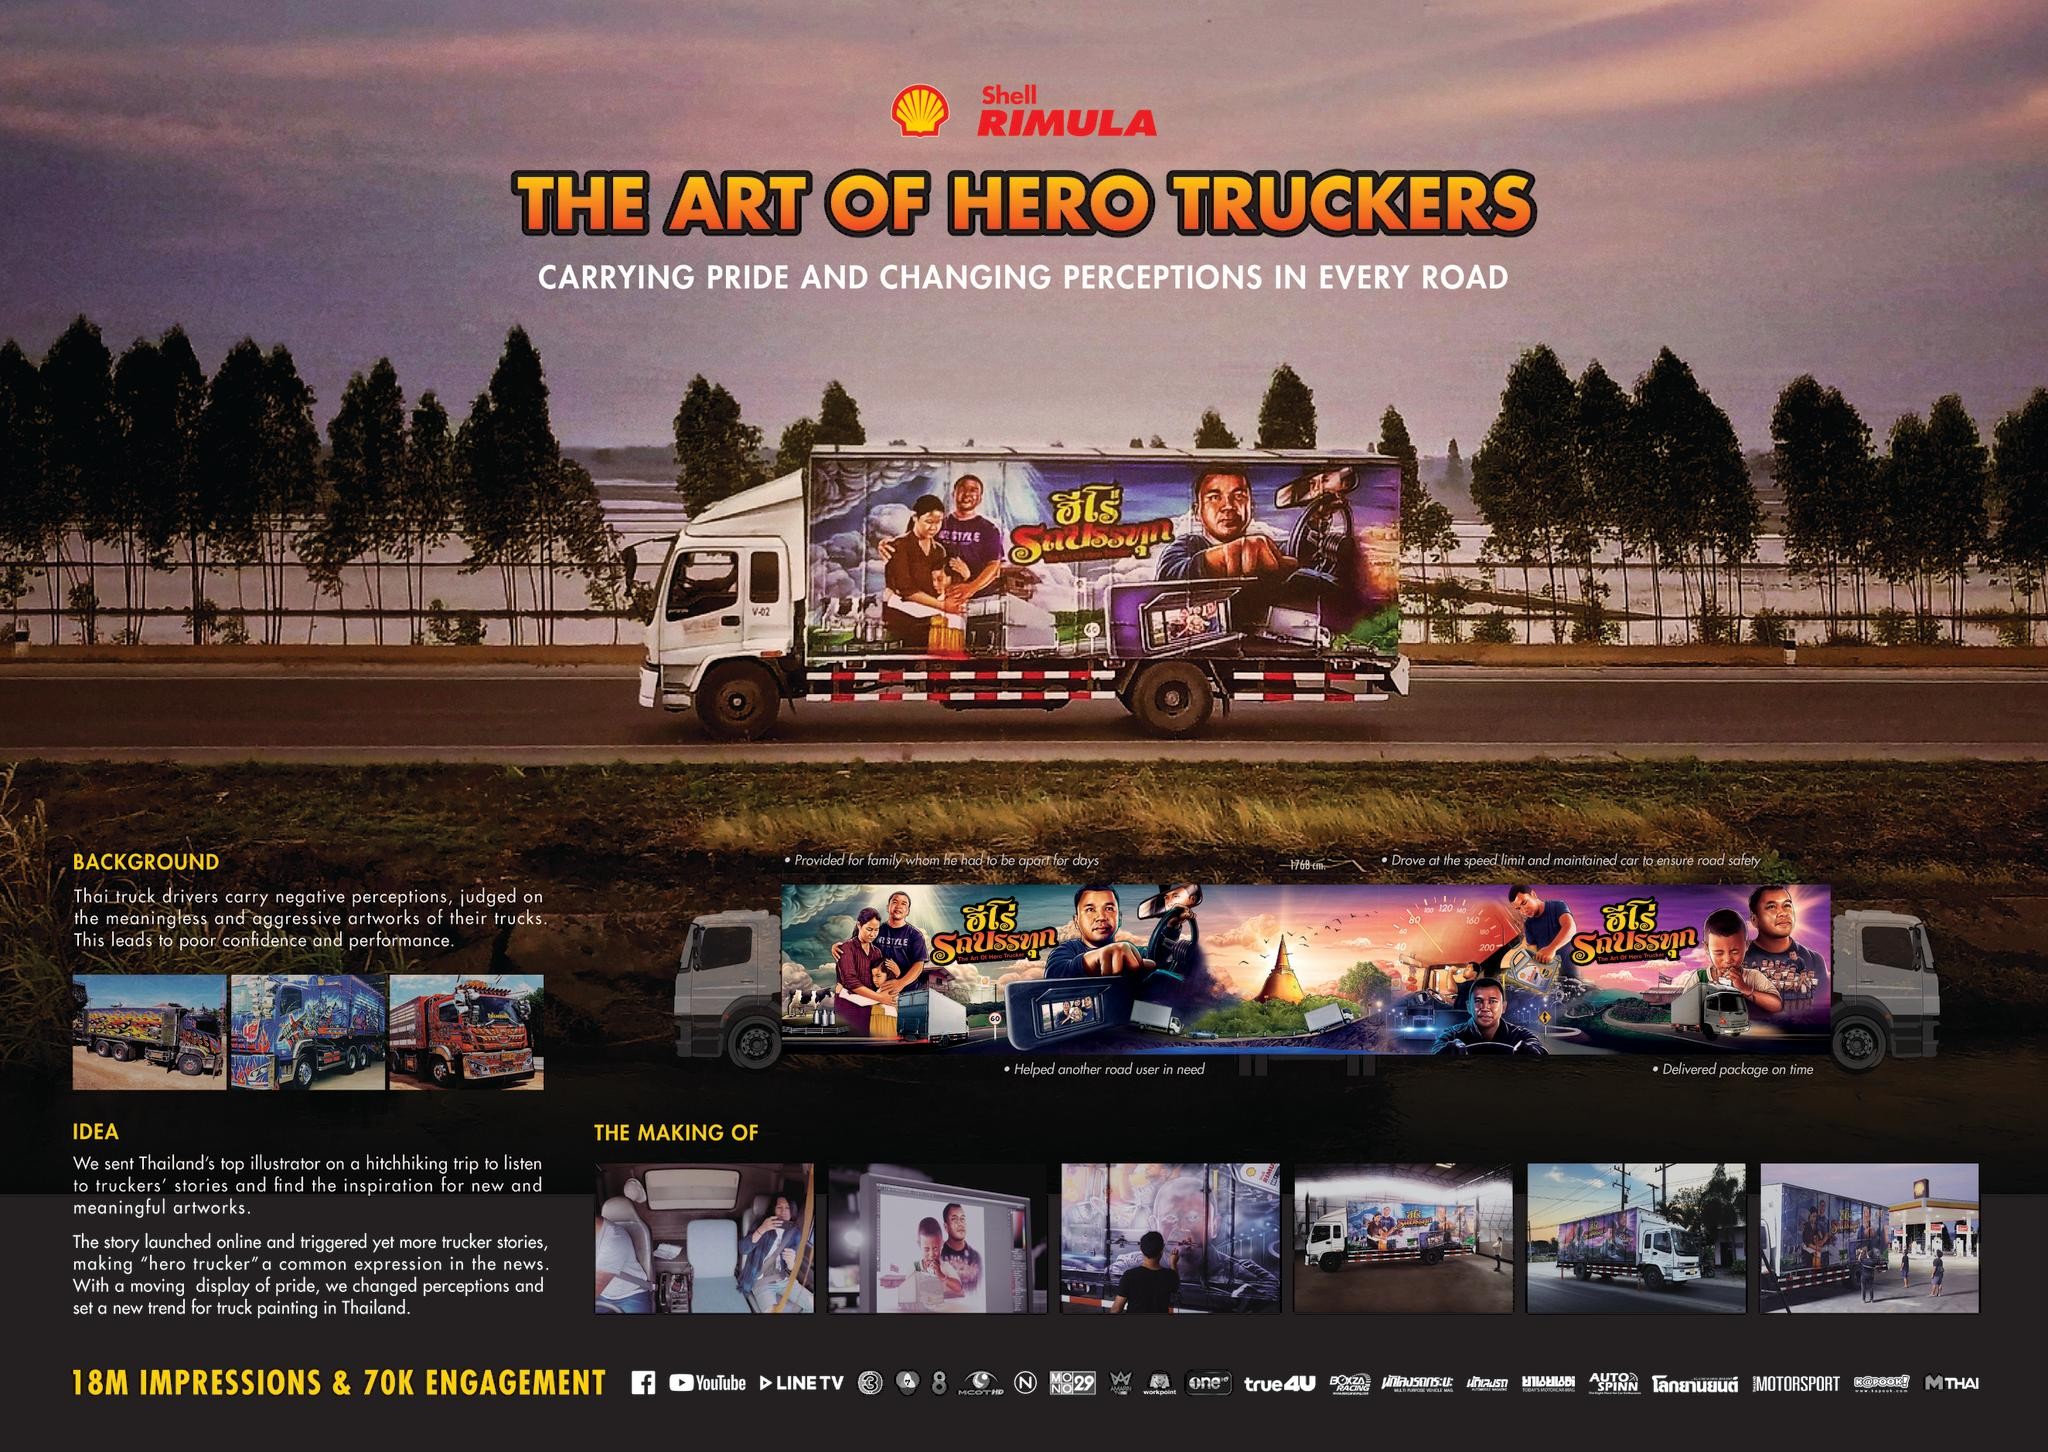 The Art of Hero Truckers